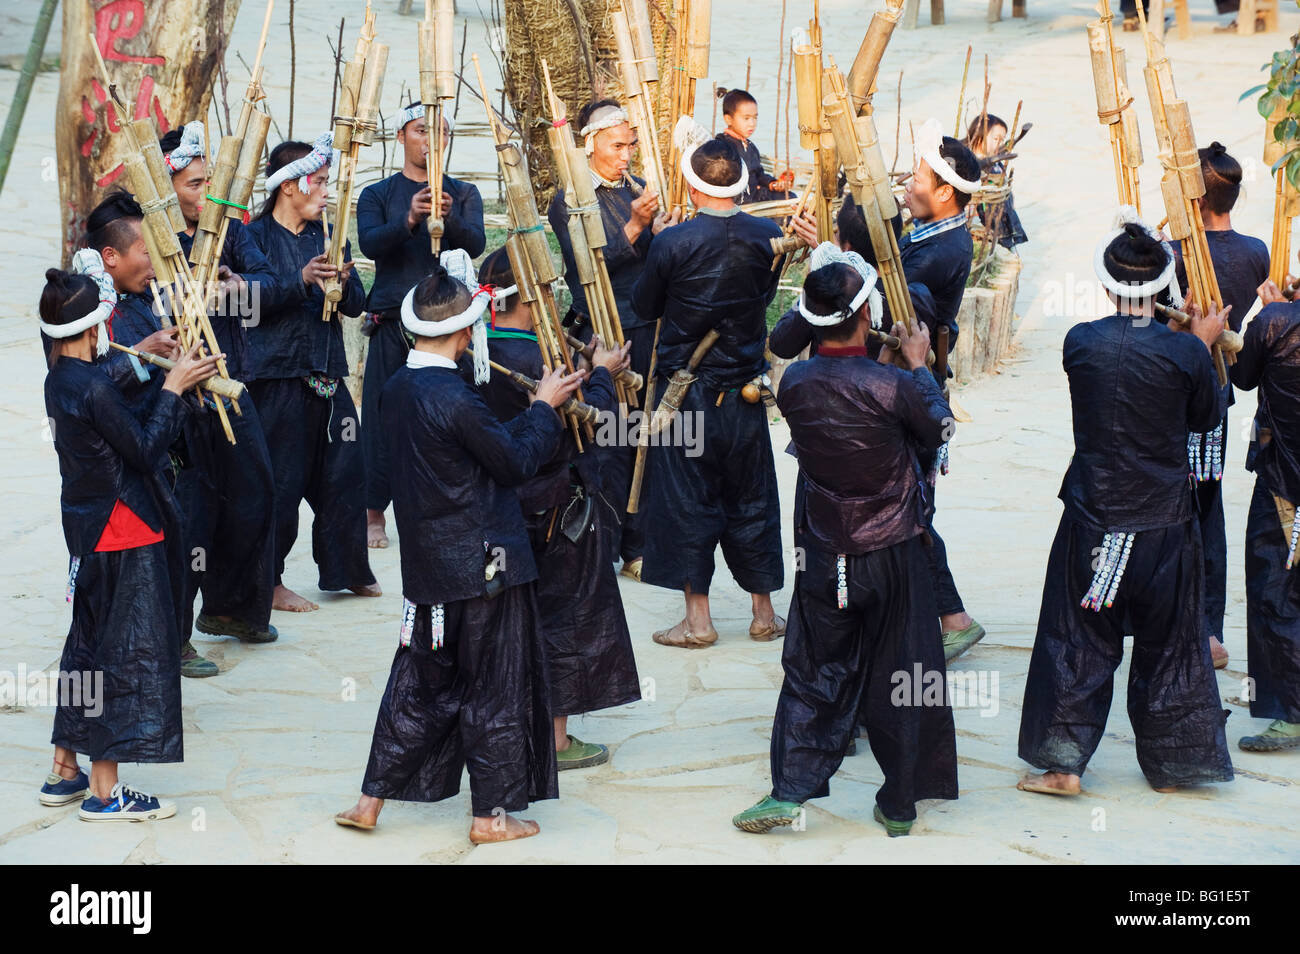 Miao ethnic minority group playing traditional musical bamboo instruments at Basha, Guizhou Province, China, Asia Stock Photo